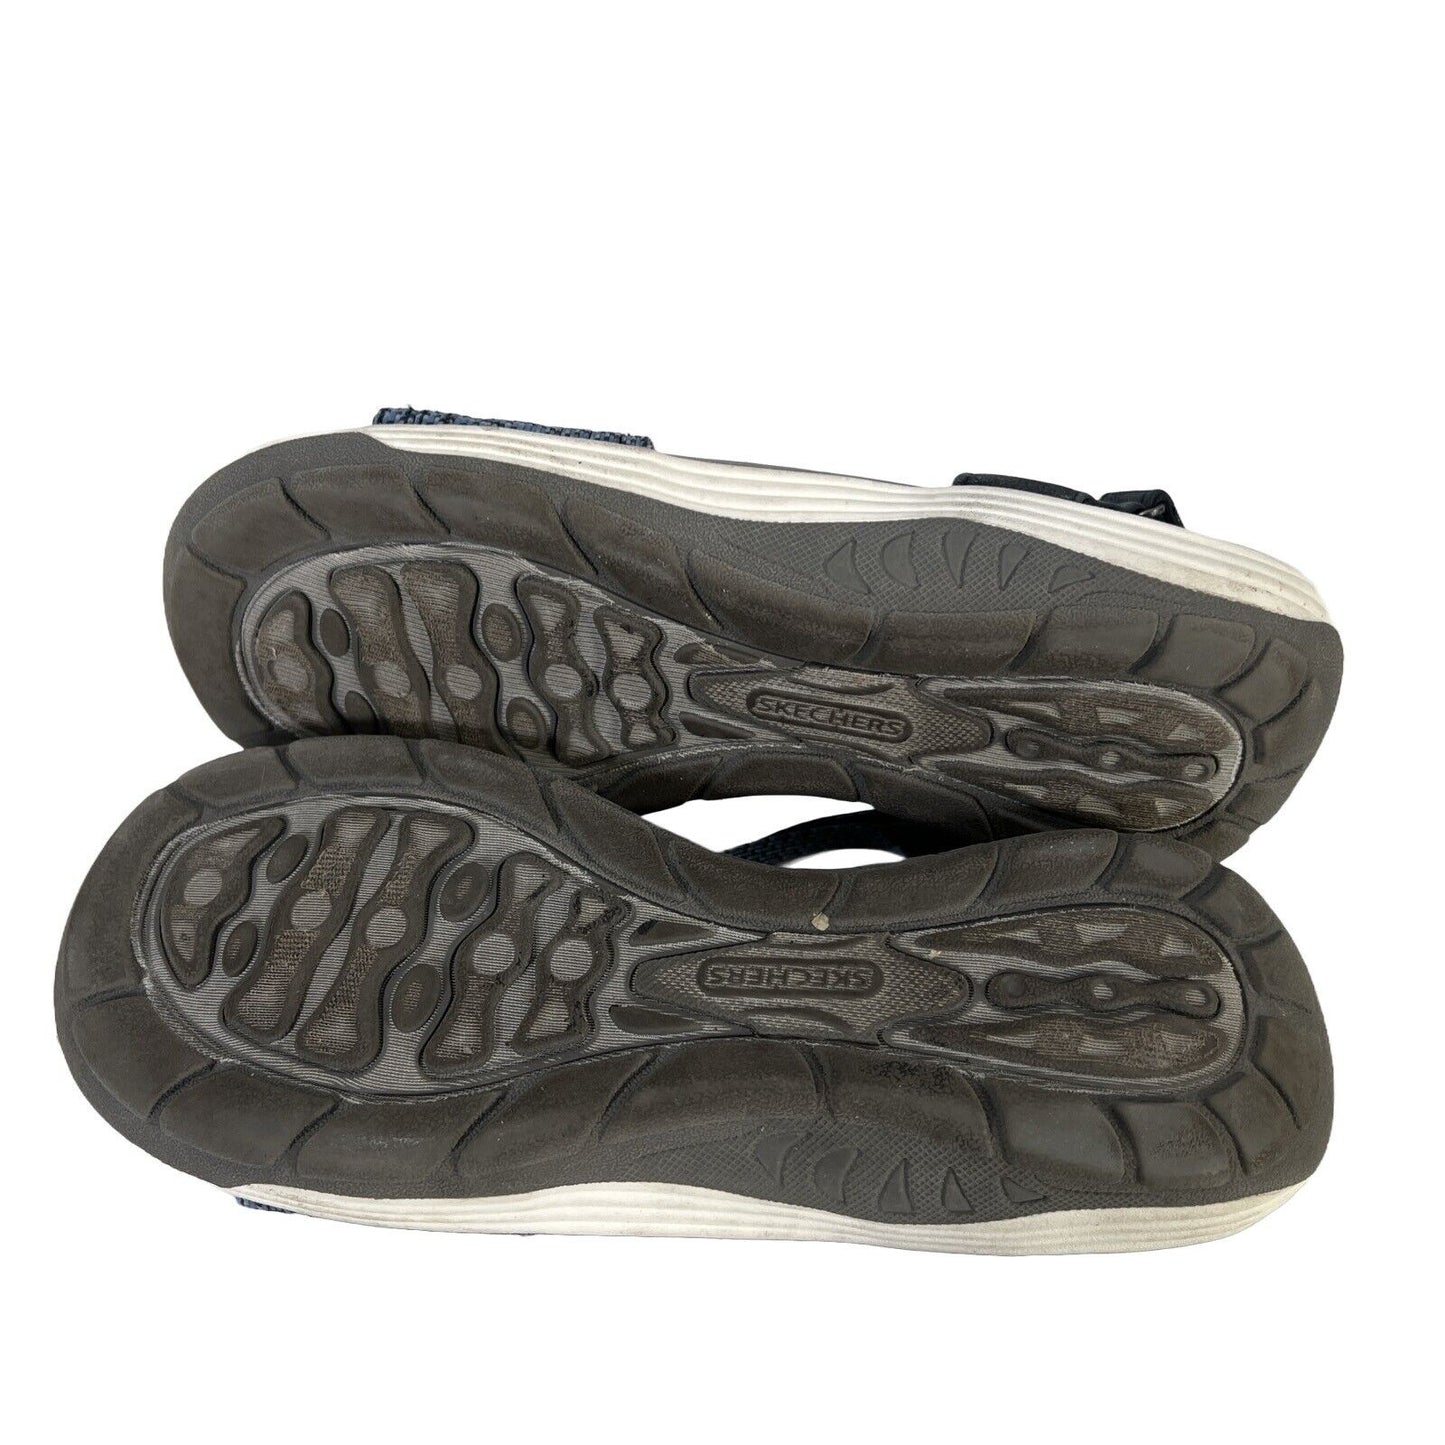 Skechers Women's Blue/Gray Ankle Strap Strappy Sport Sandals - 8